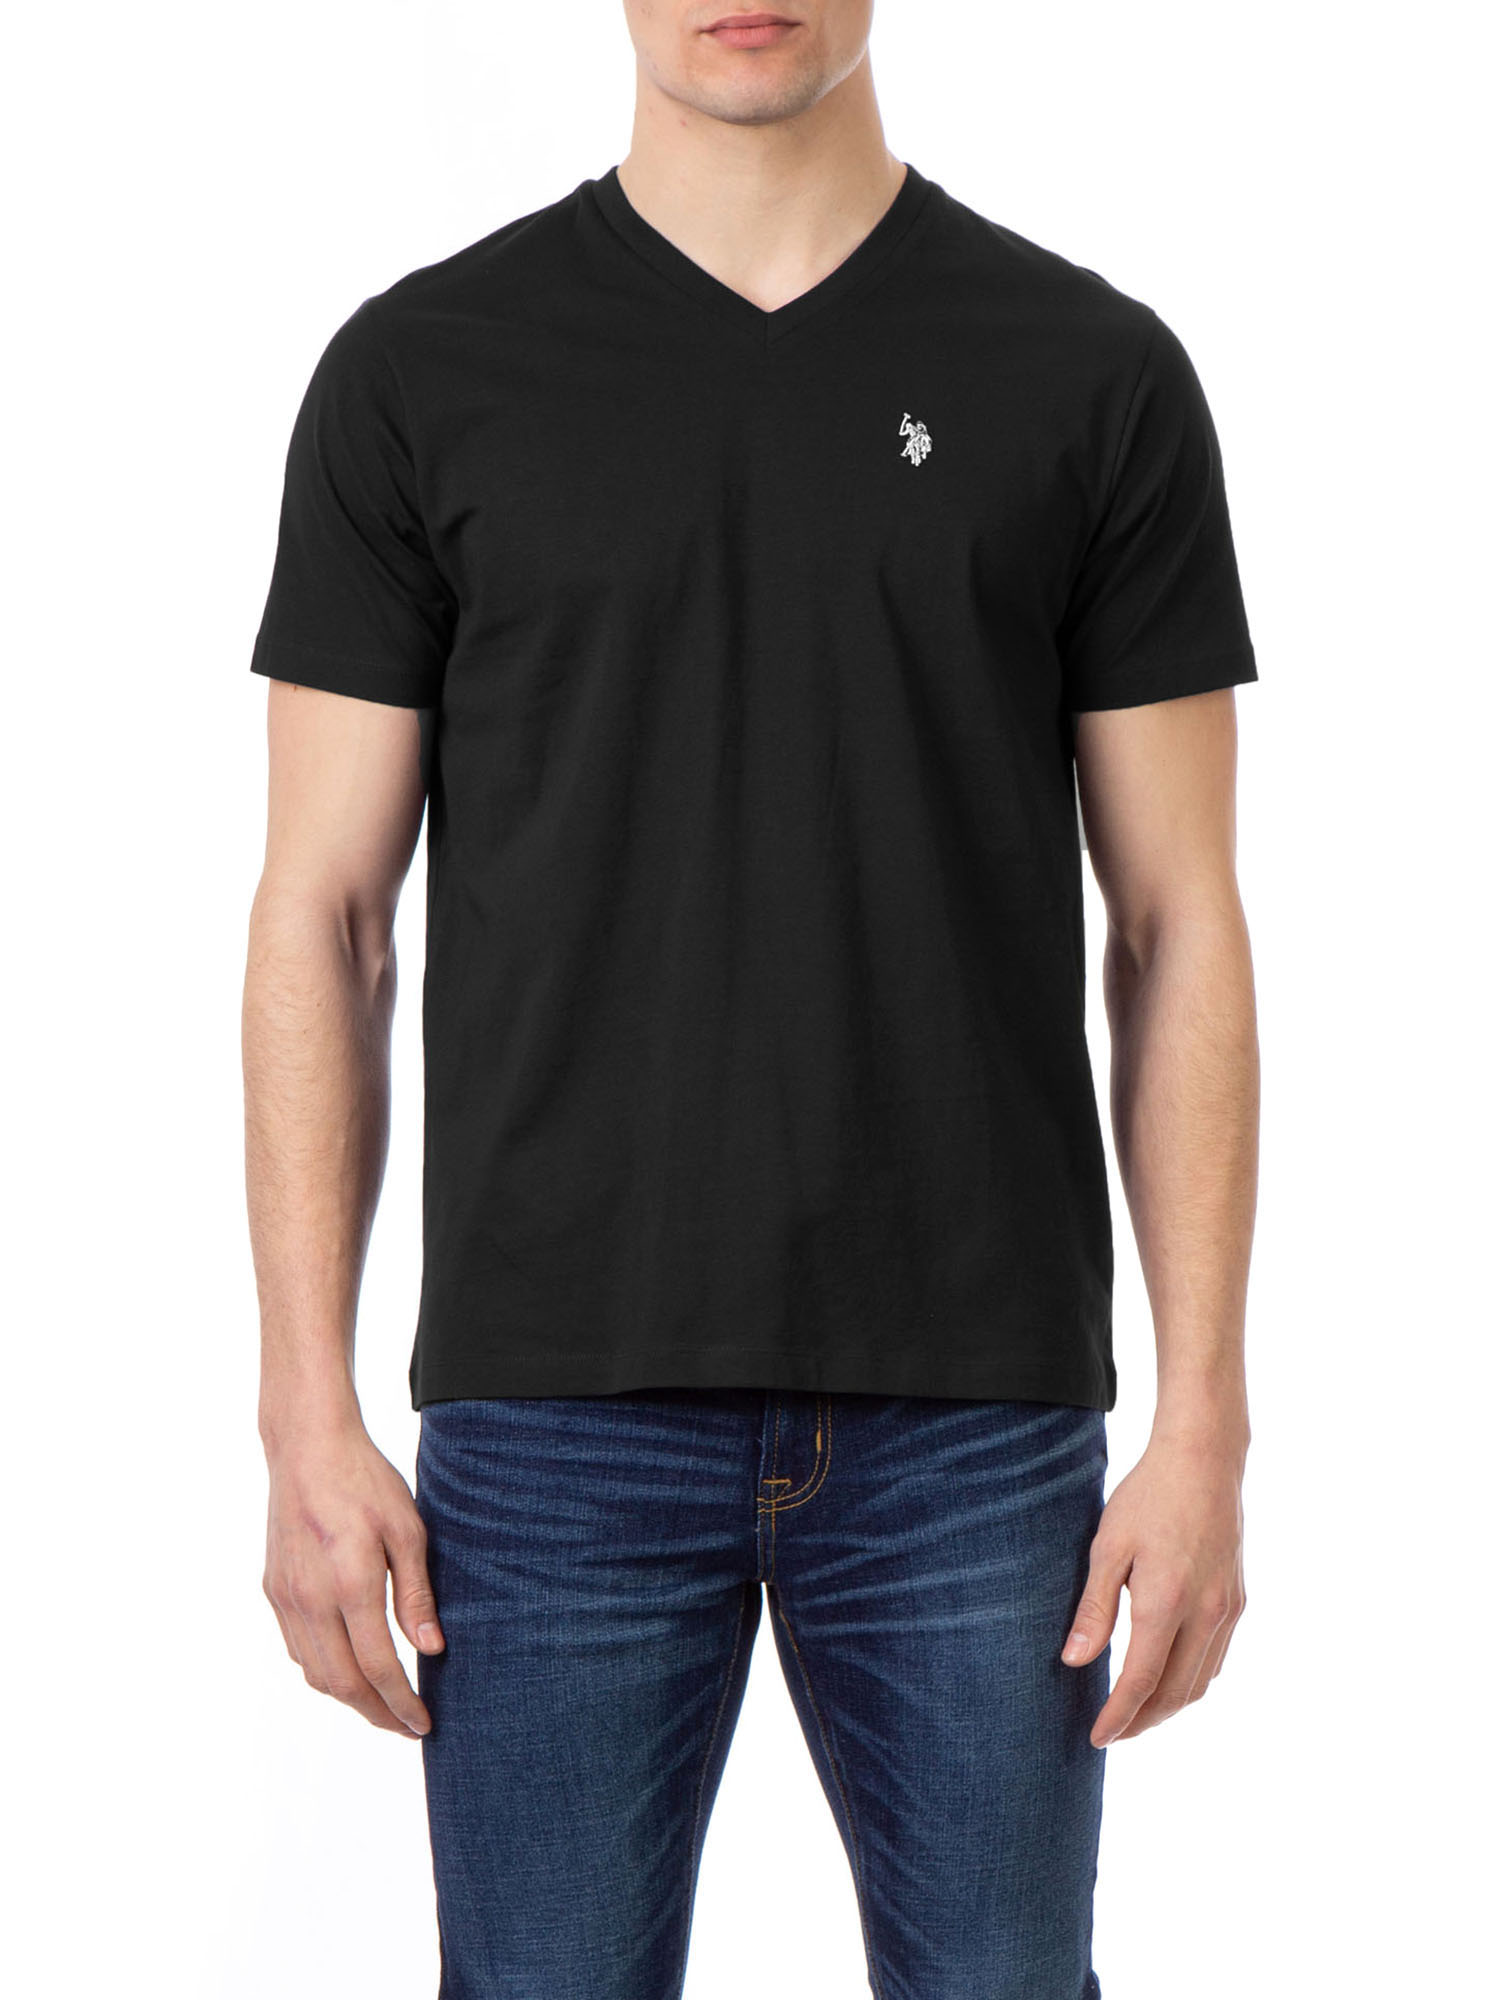 U.S. Polo Assn. Men's V-Neck Knit T-Shirt - image 1 of 2